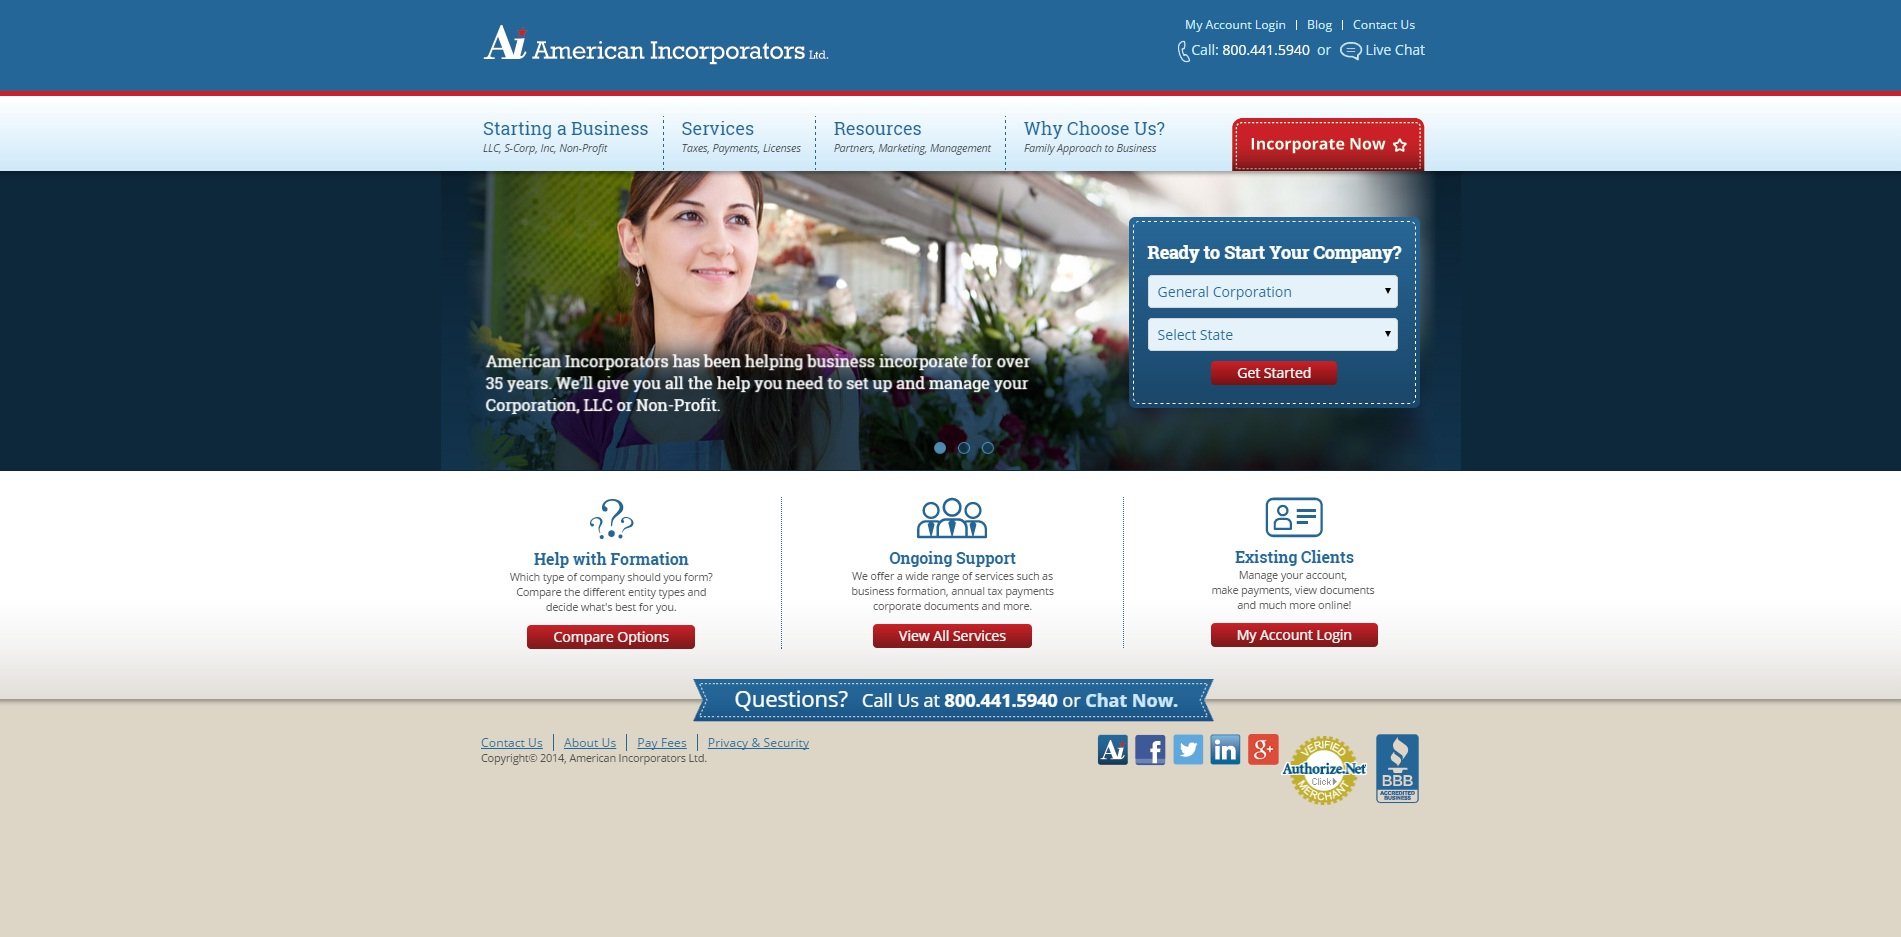 American Incorporators Ltd. Launches Enhanced Web Experience